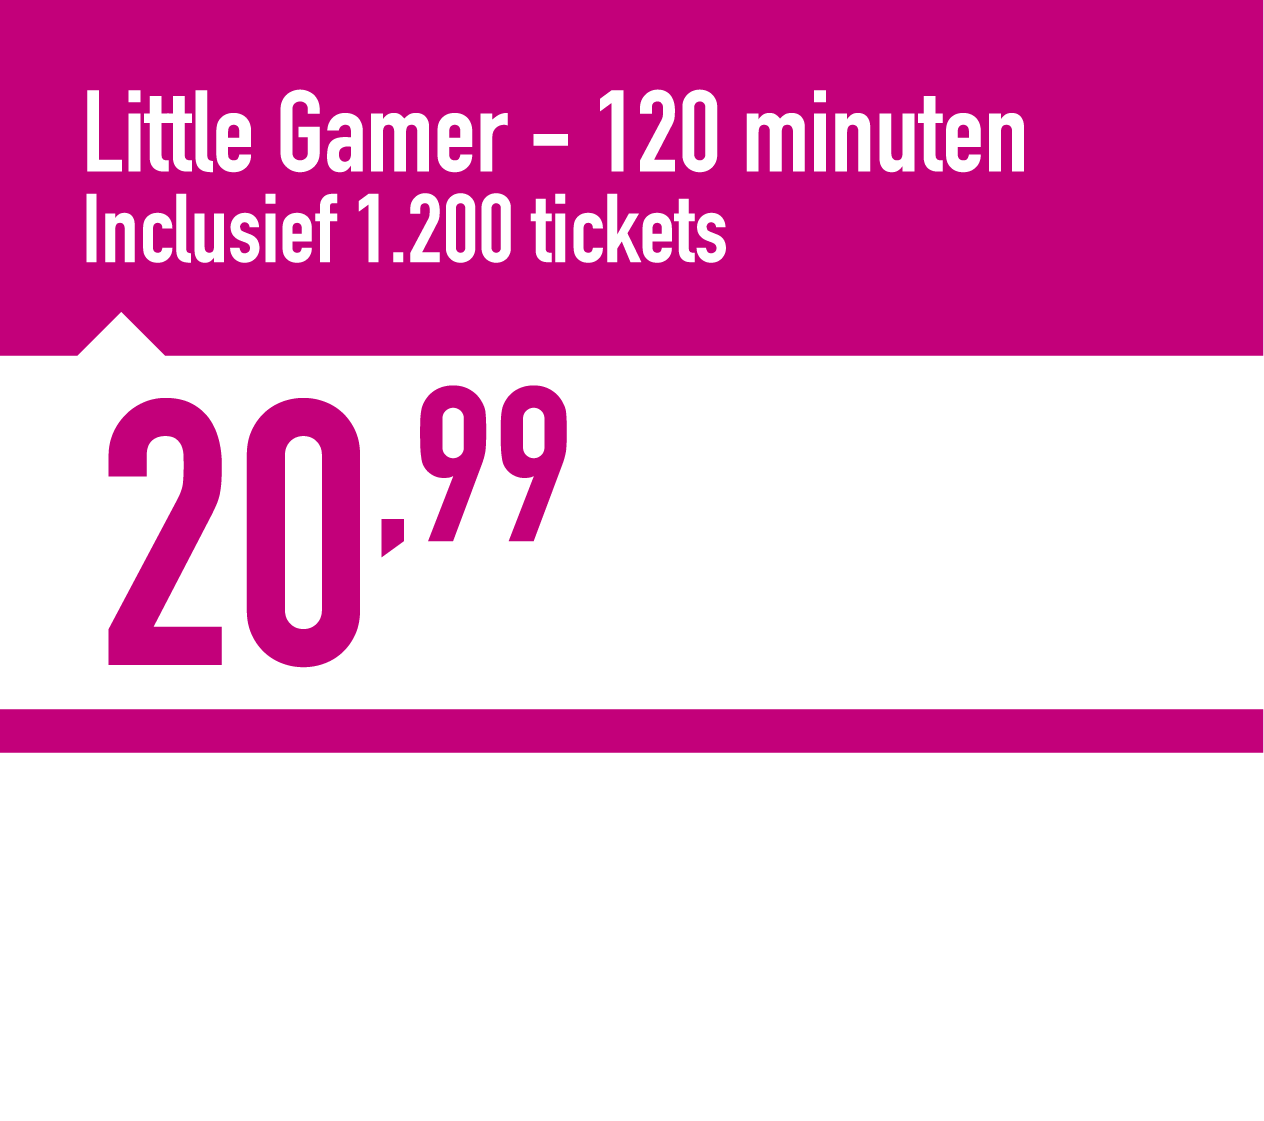 Little Gamer - 120 minuten